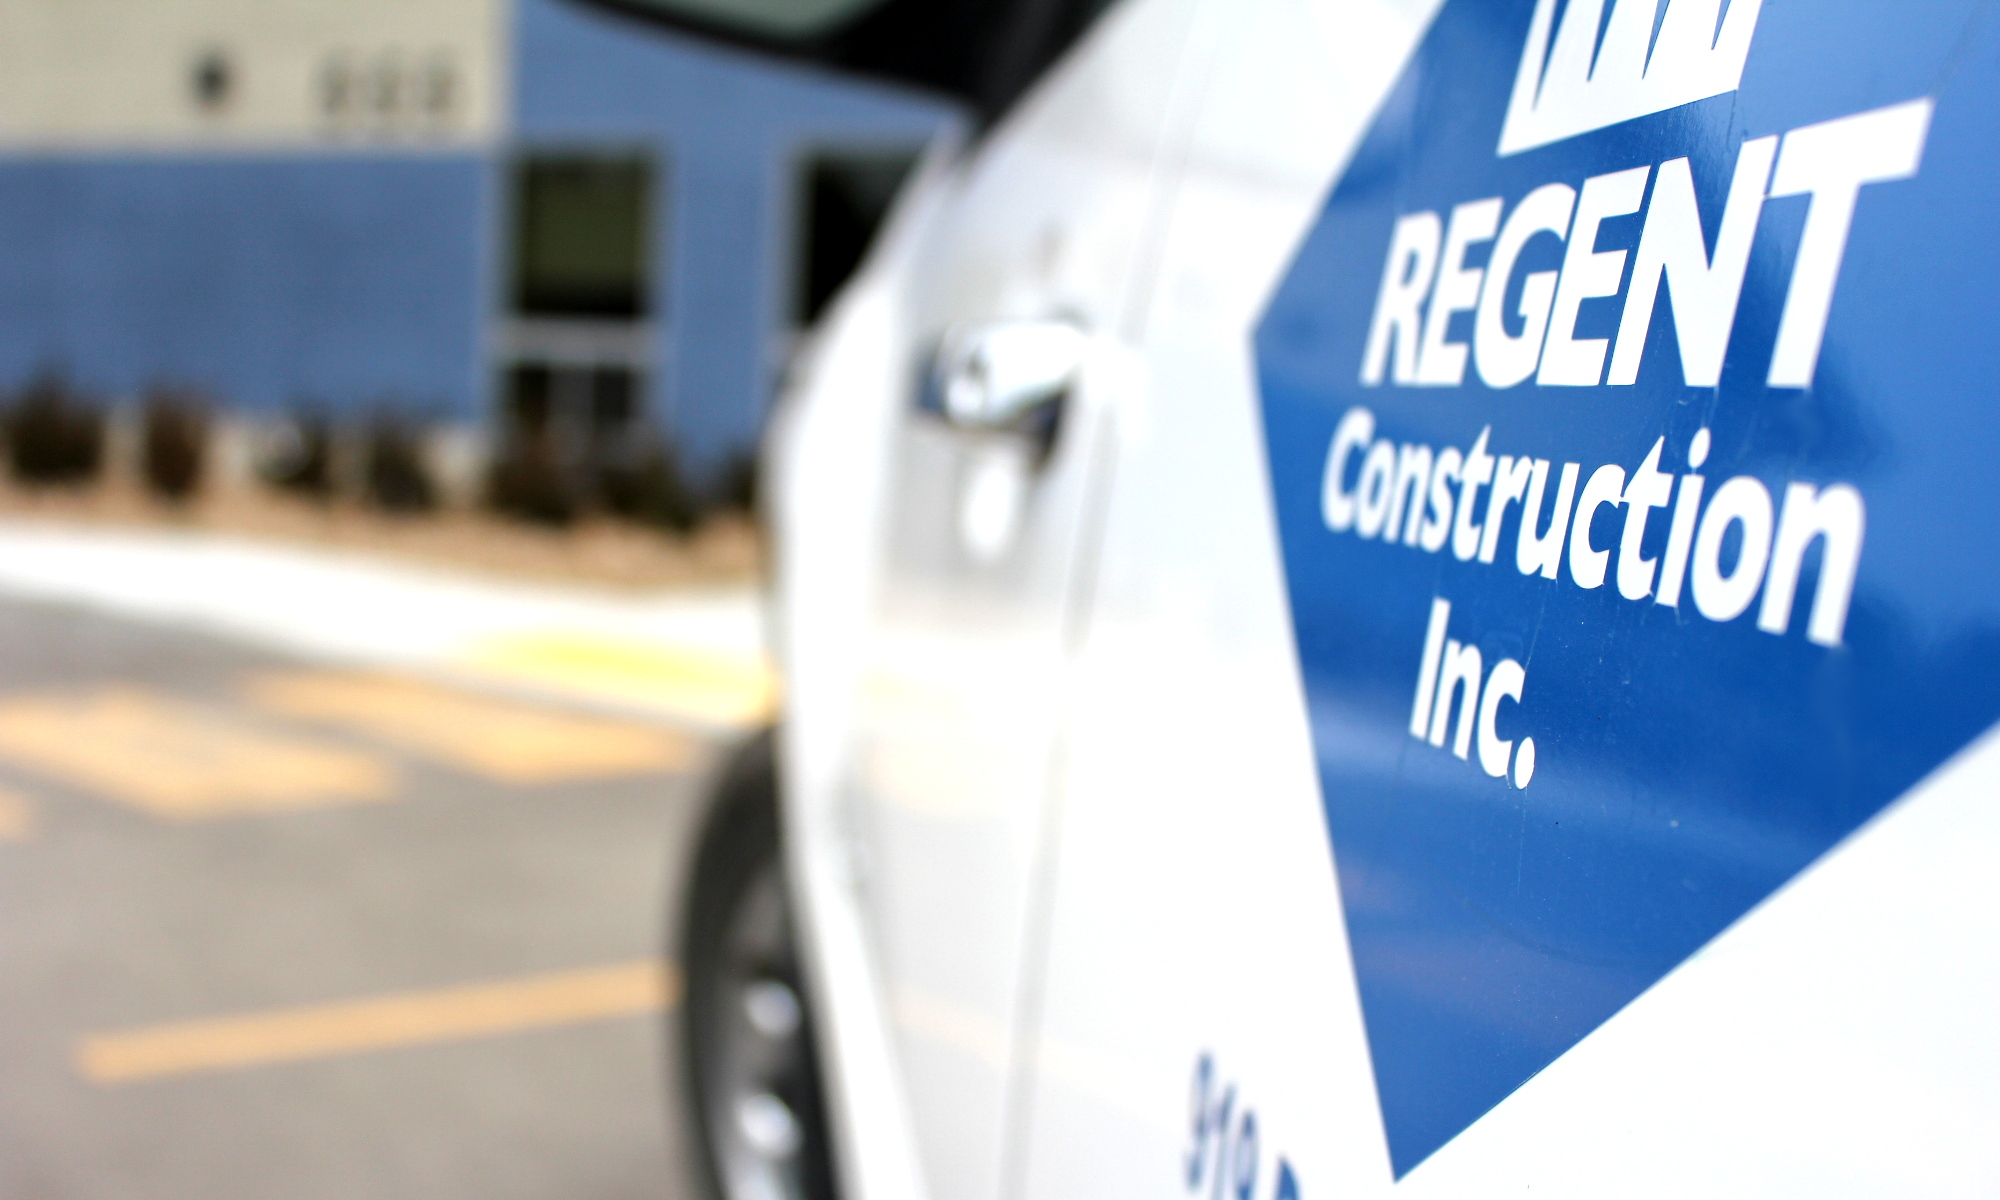 Regent construction Inc.